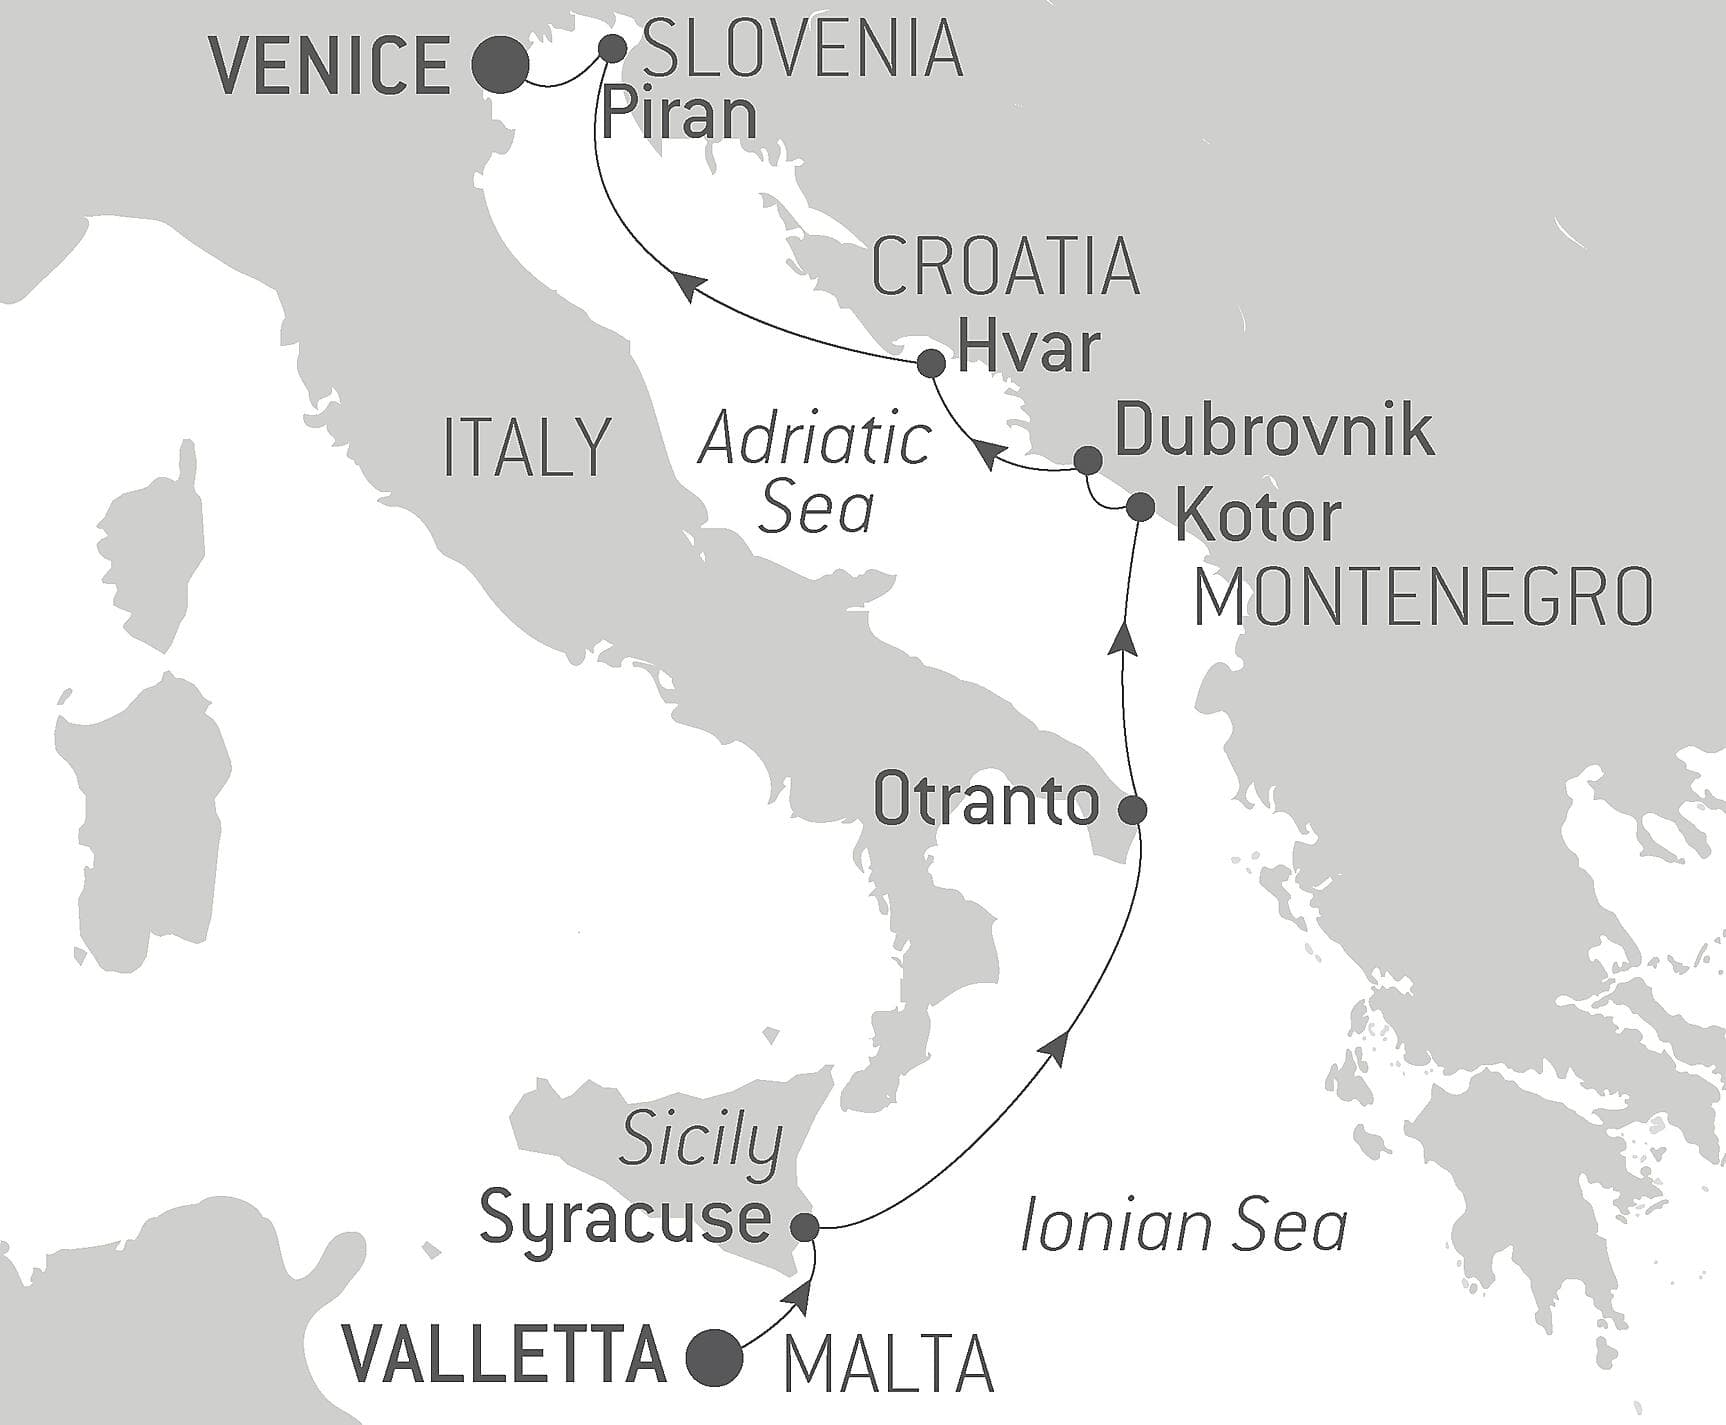 From Malta to the Adriatic coast